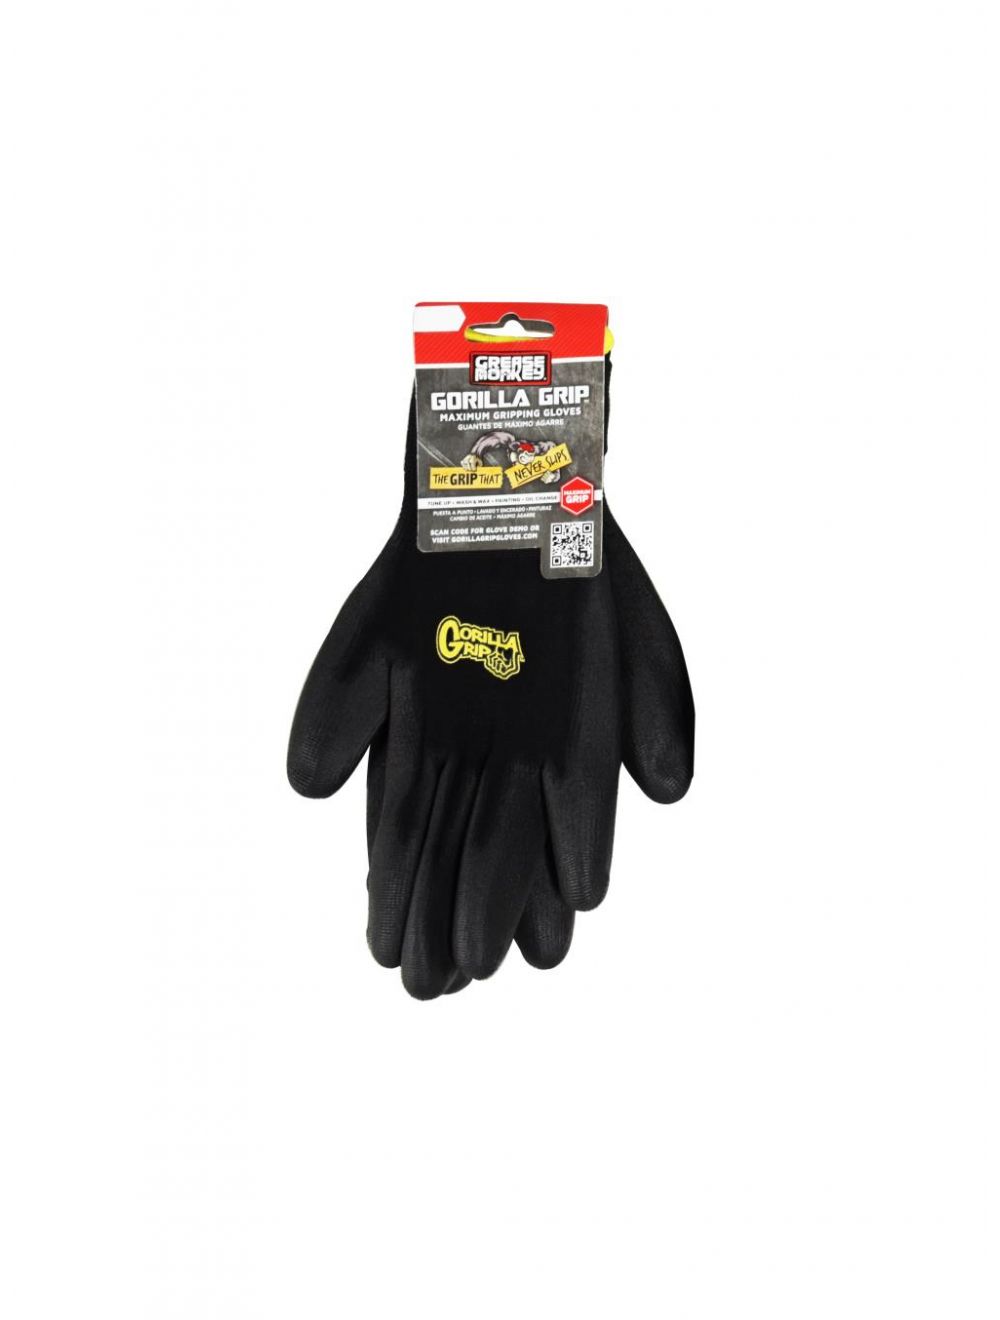 Grease Monkey Large Gorilla Grip Glove